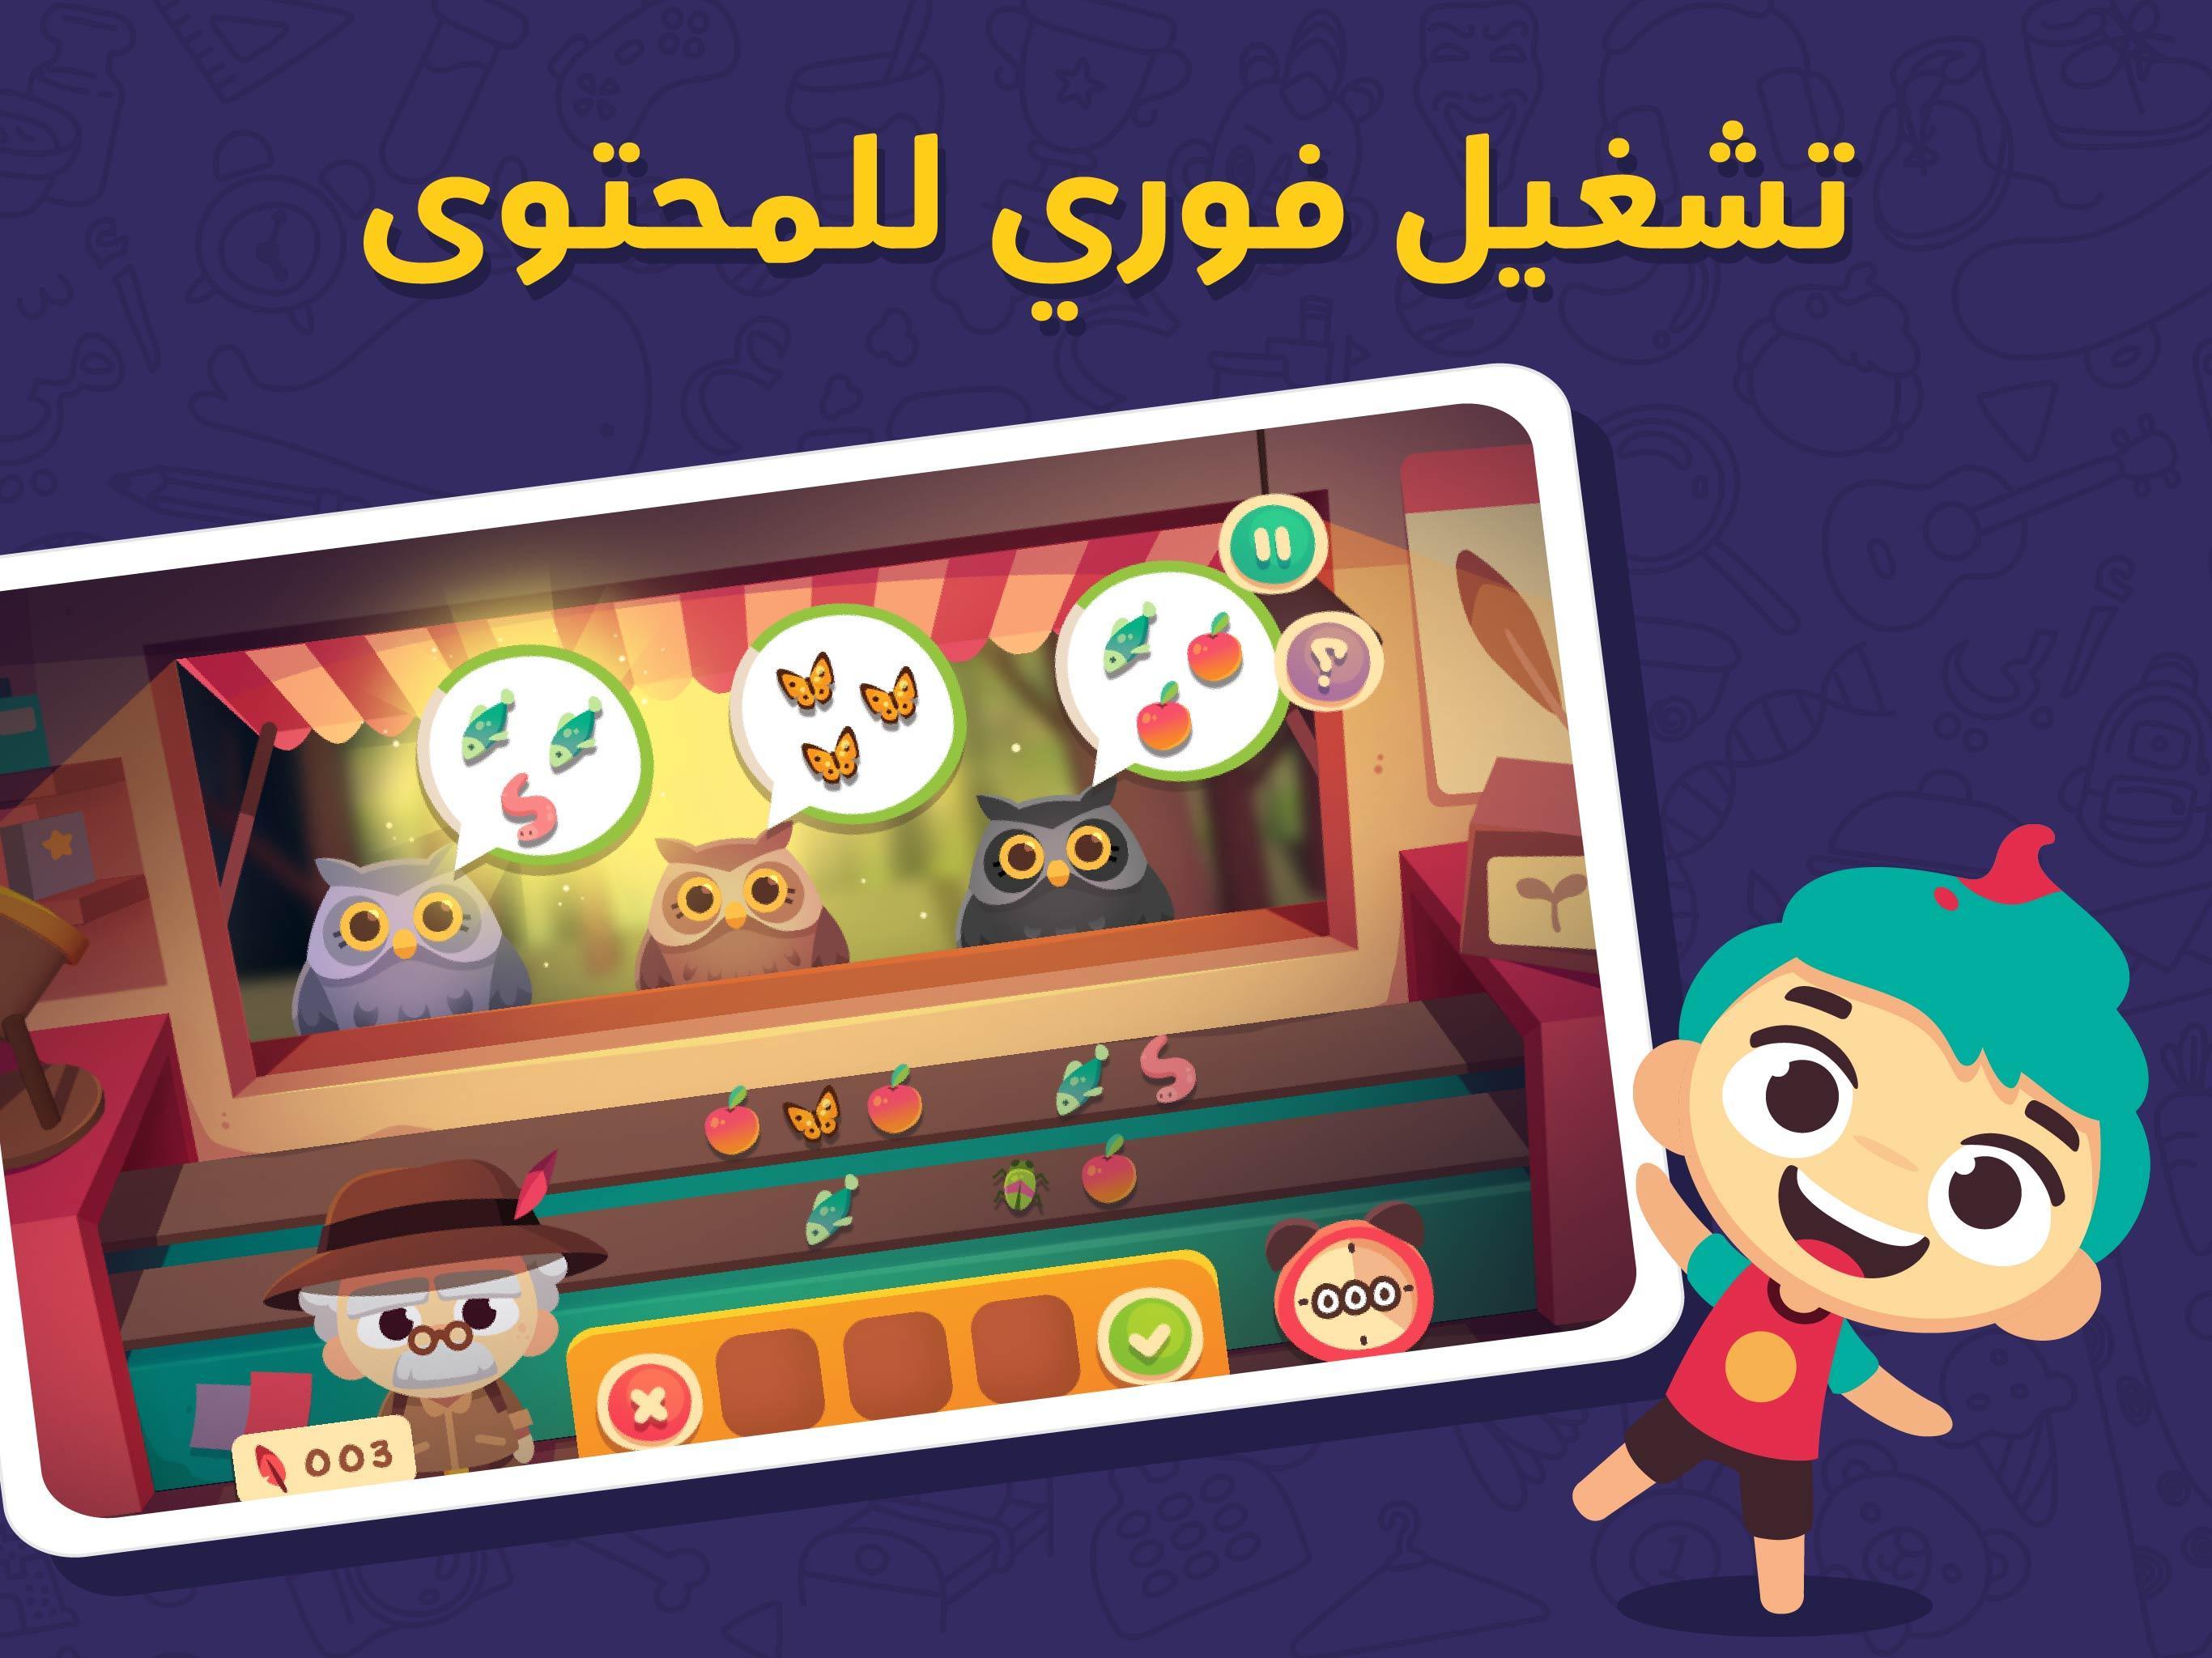 Lamsa Stories, Games, and Activities for Children 4.18.0 Screenshot 20